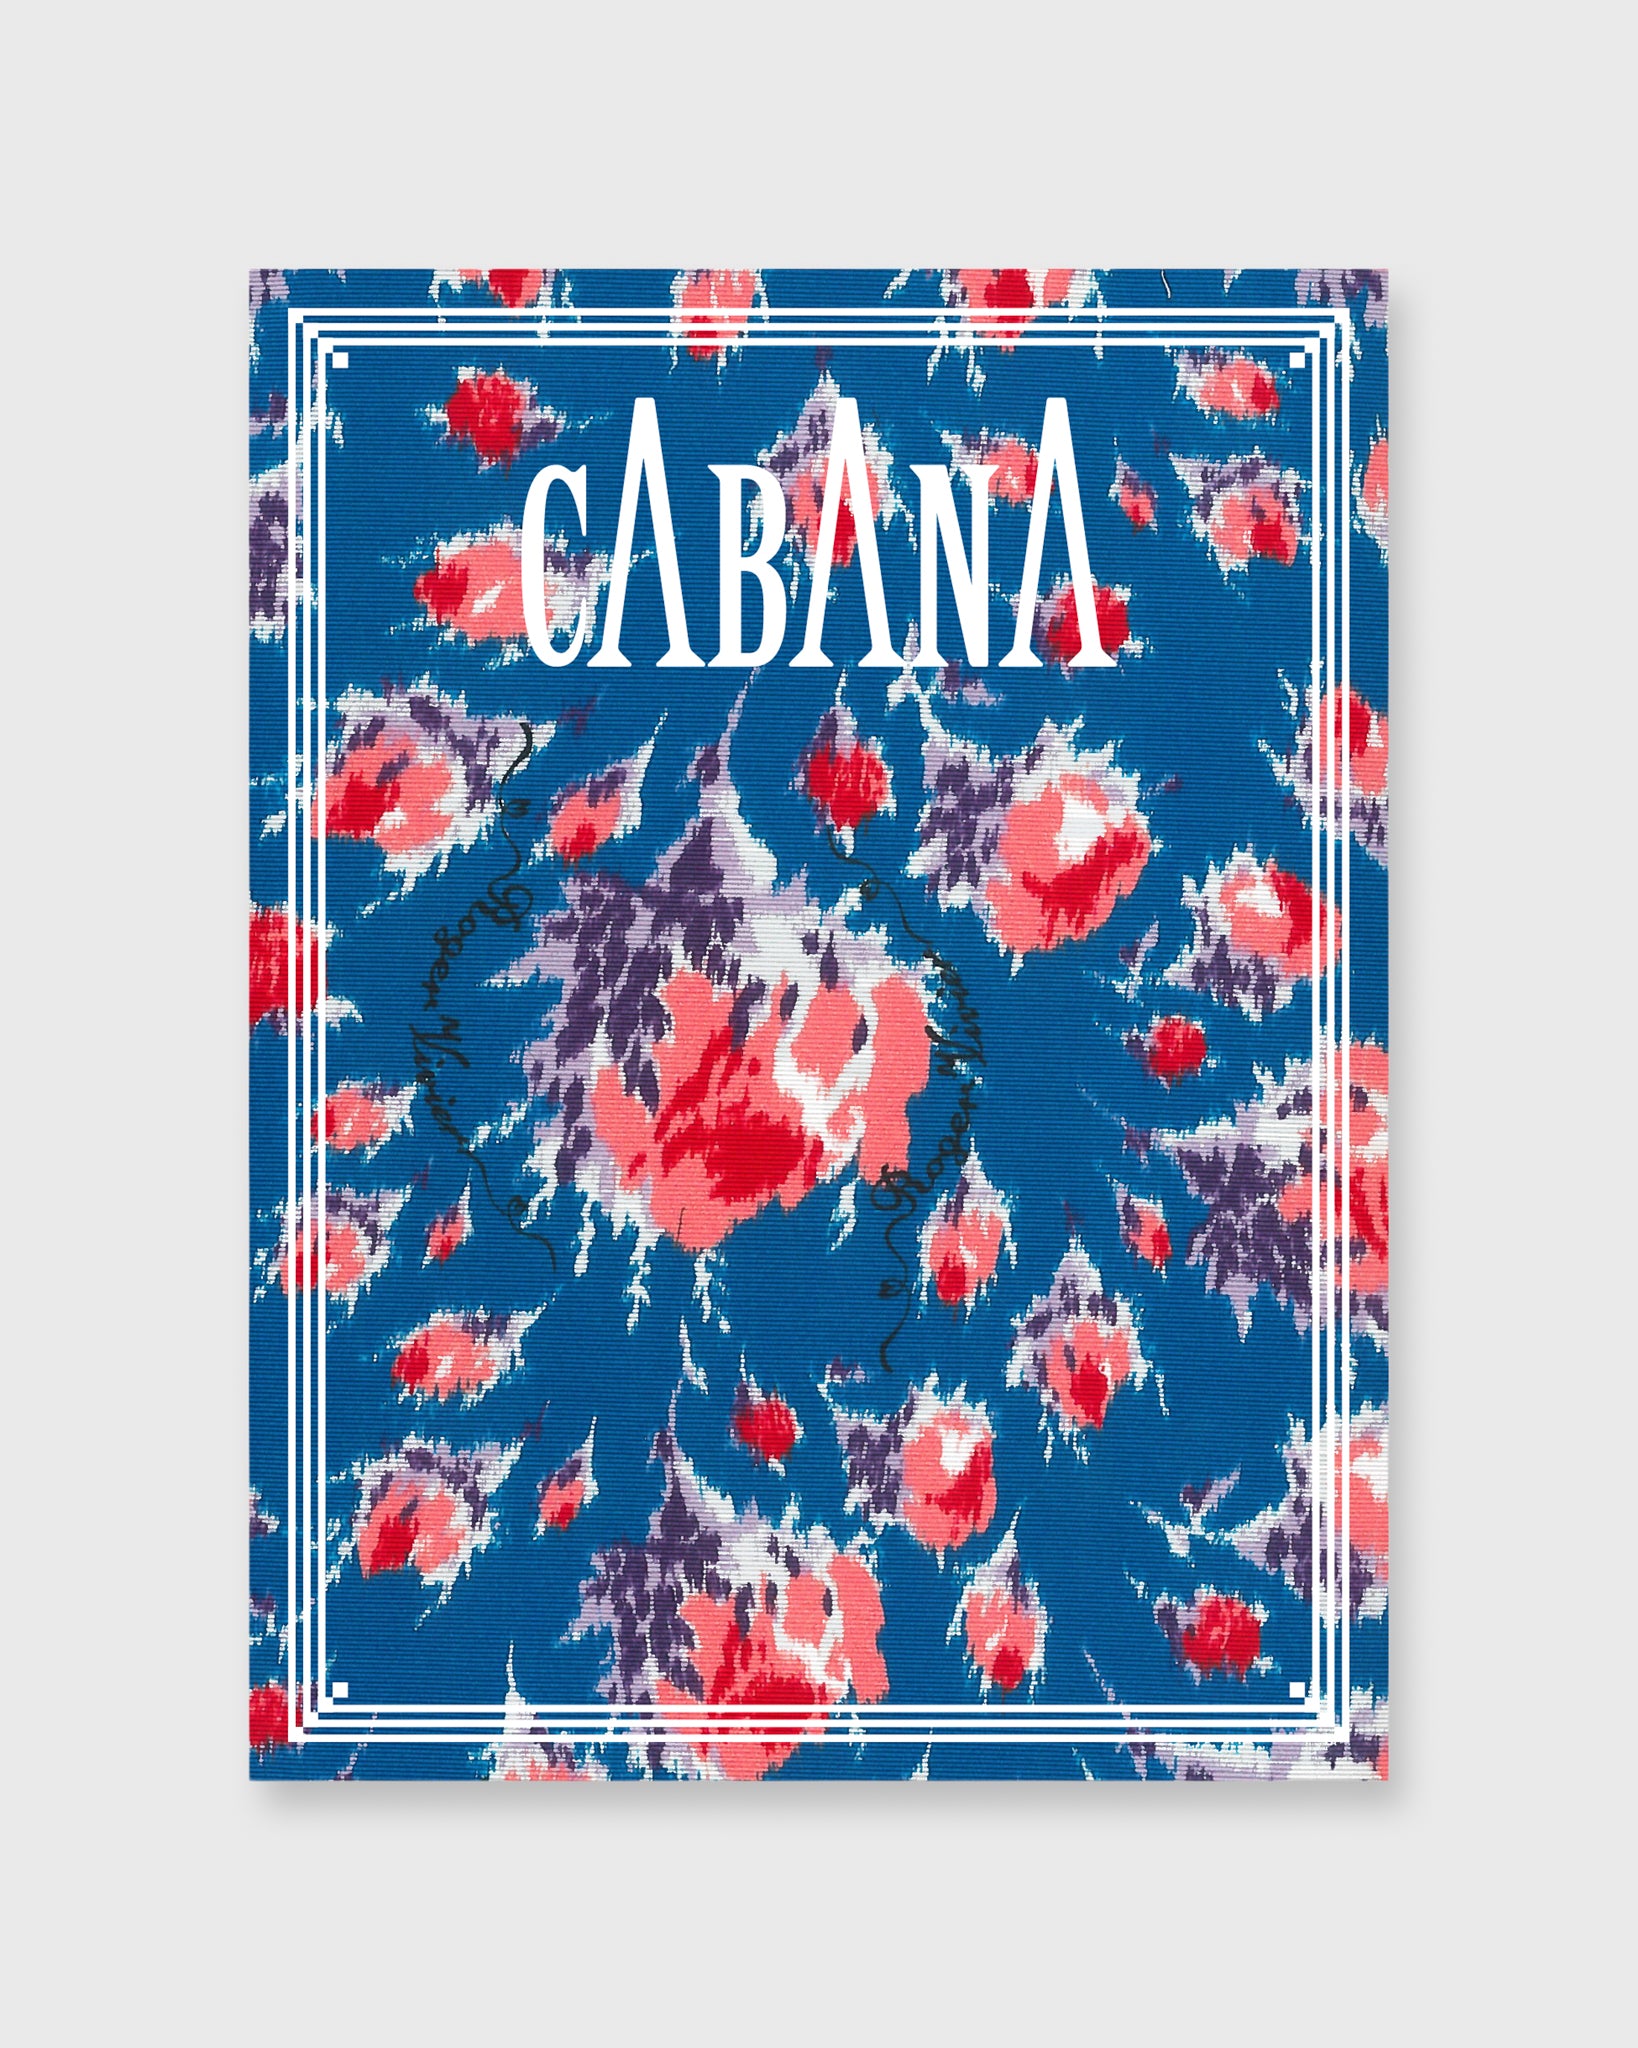 Cabana Magazine Issue No. 13